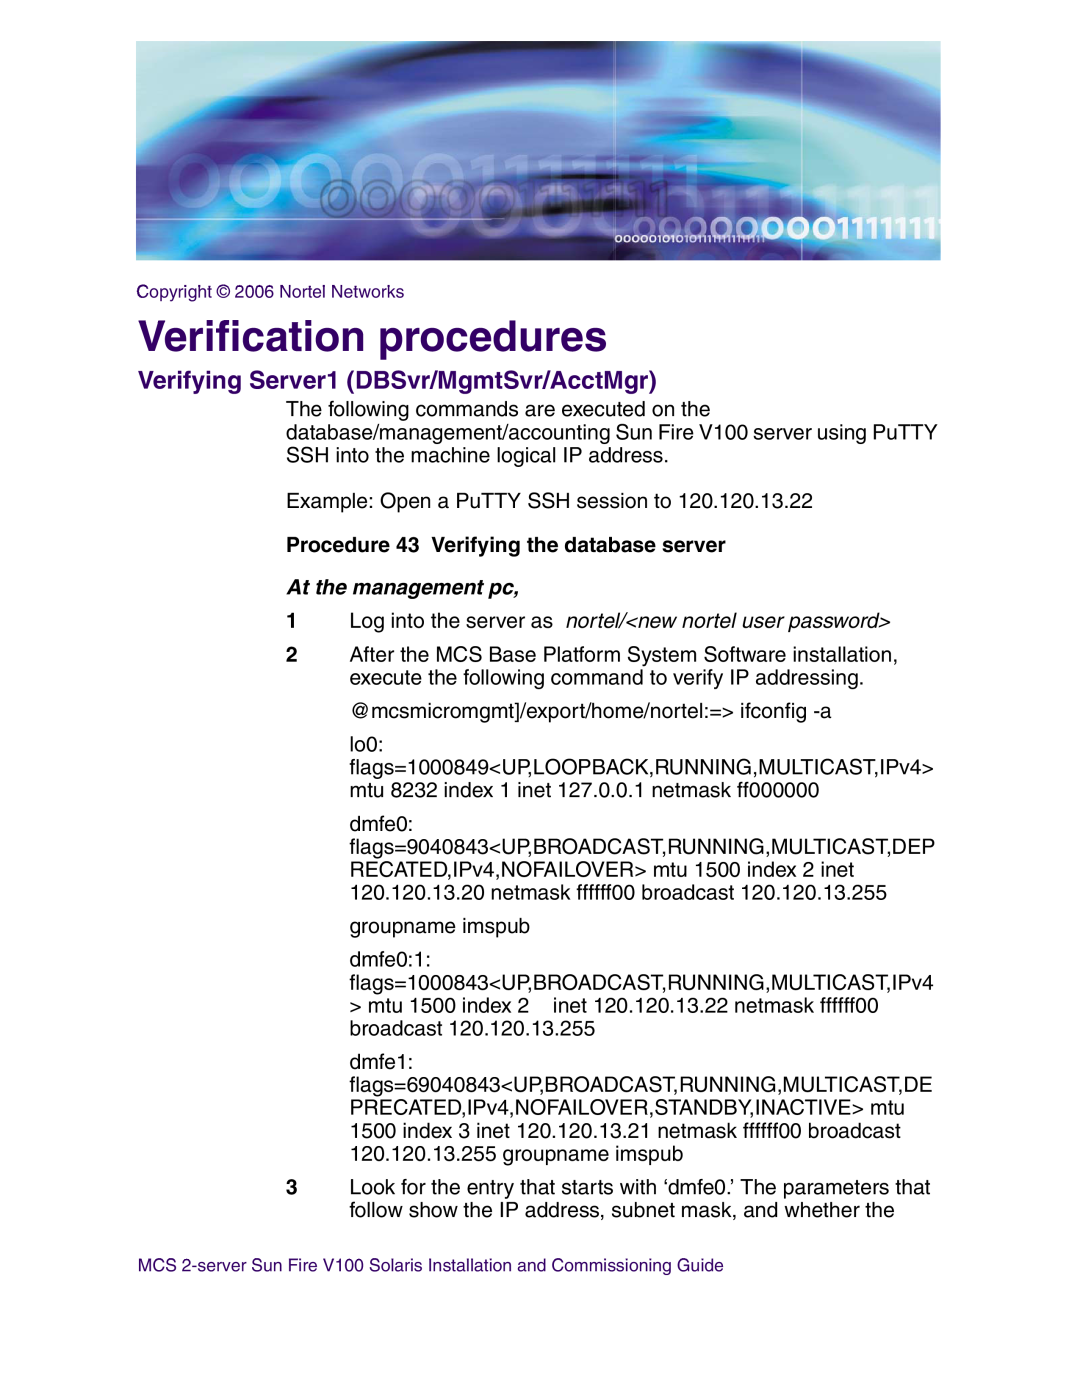 Nortel Networks V100 manual Verification procedures, Verifying Server1 DBSvr/MgmtSvr/AcctMgr, At the management pc 